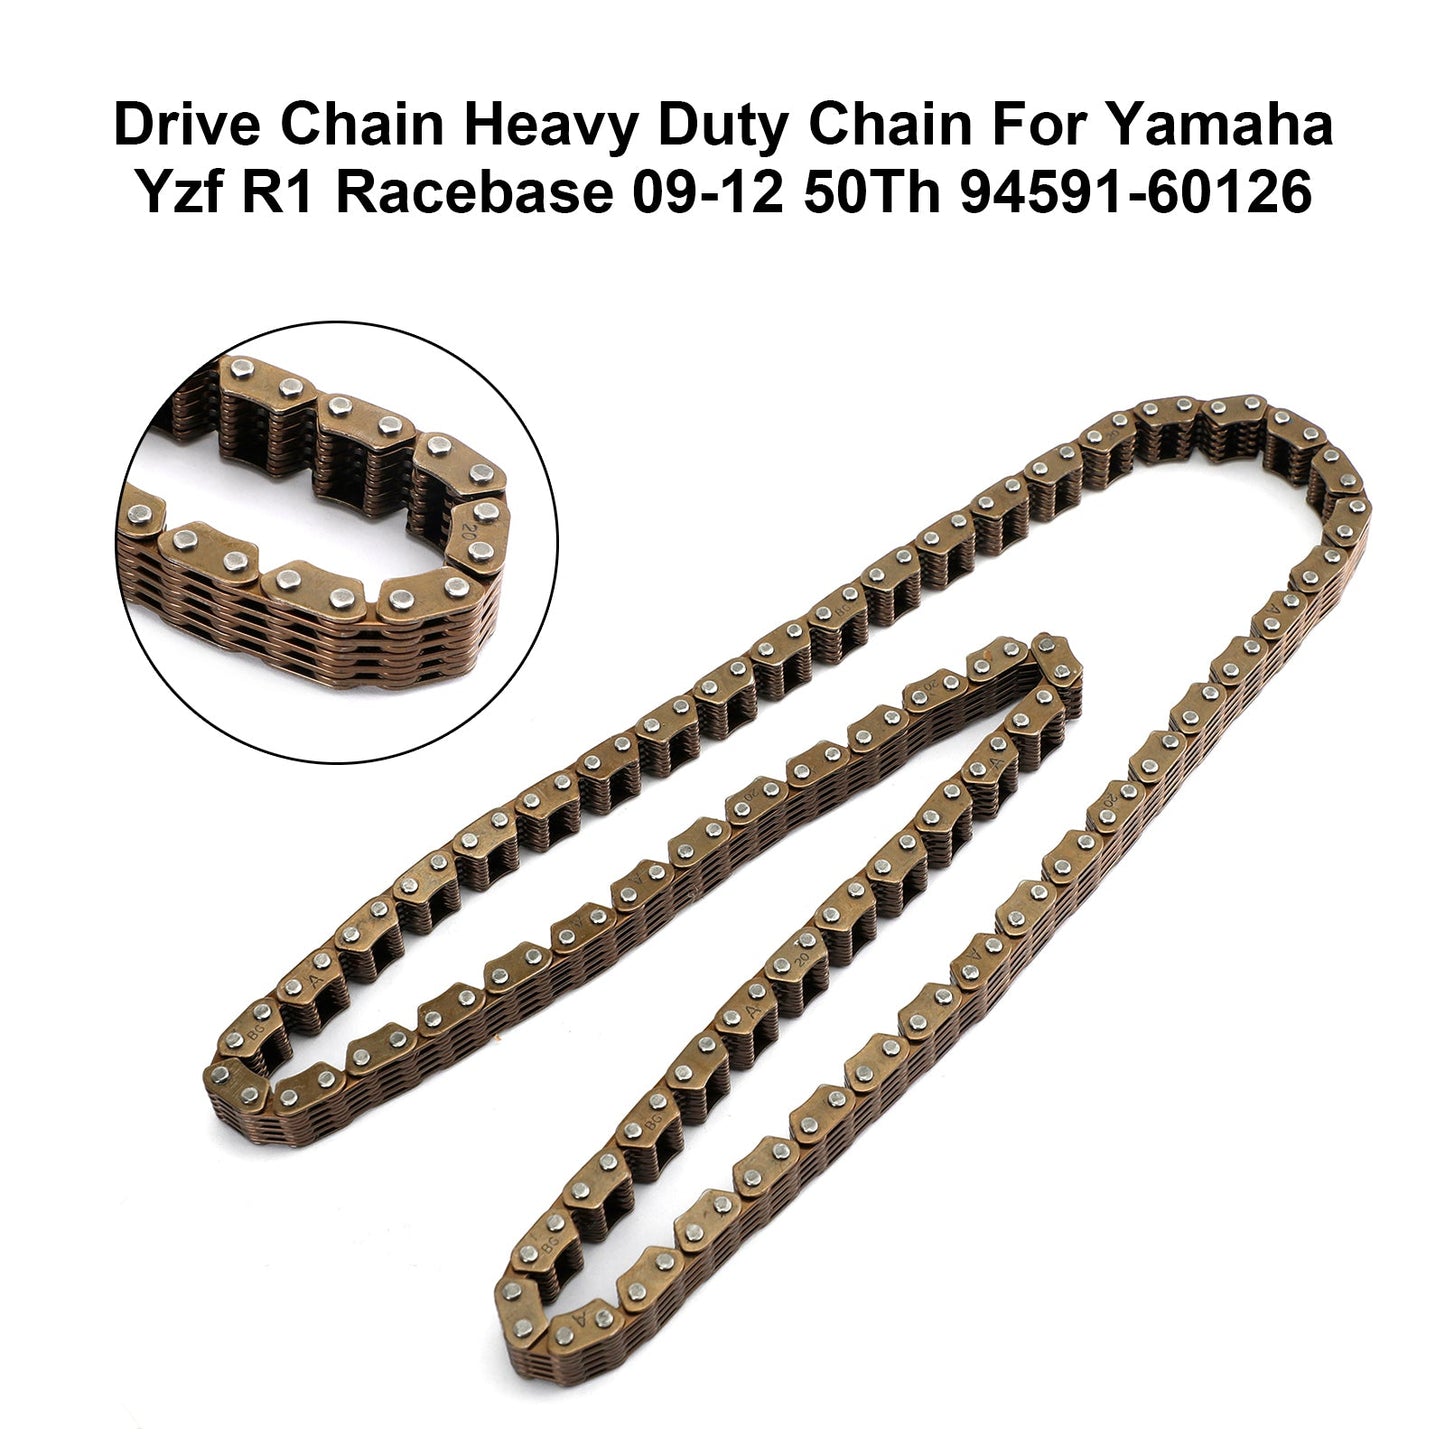 New Heavy Duty Drive Chain For Yamaha Yzf R1 Racebase 09-12 50Th 94591-60126